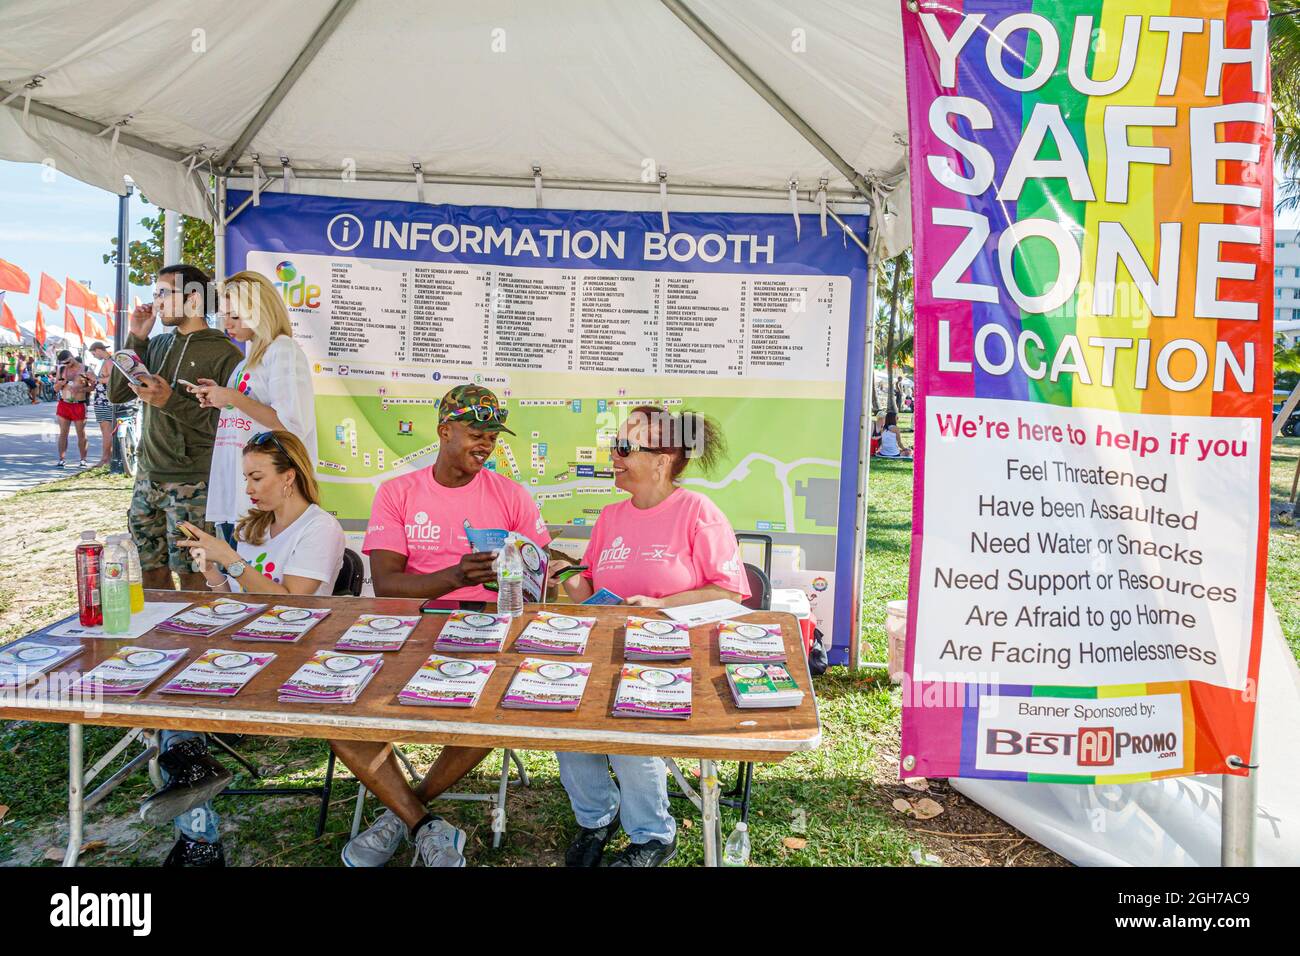 Miami Beach Florida,Gay Pride Week LGBTQ LGBT Pride Festival booth table vendor,Youth Safe Zone,Black man woman volunteers helping volunteering teamwo Stock Photo